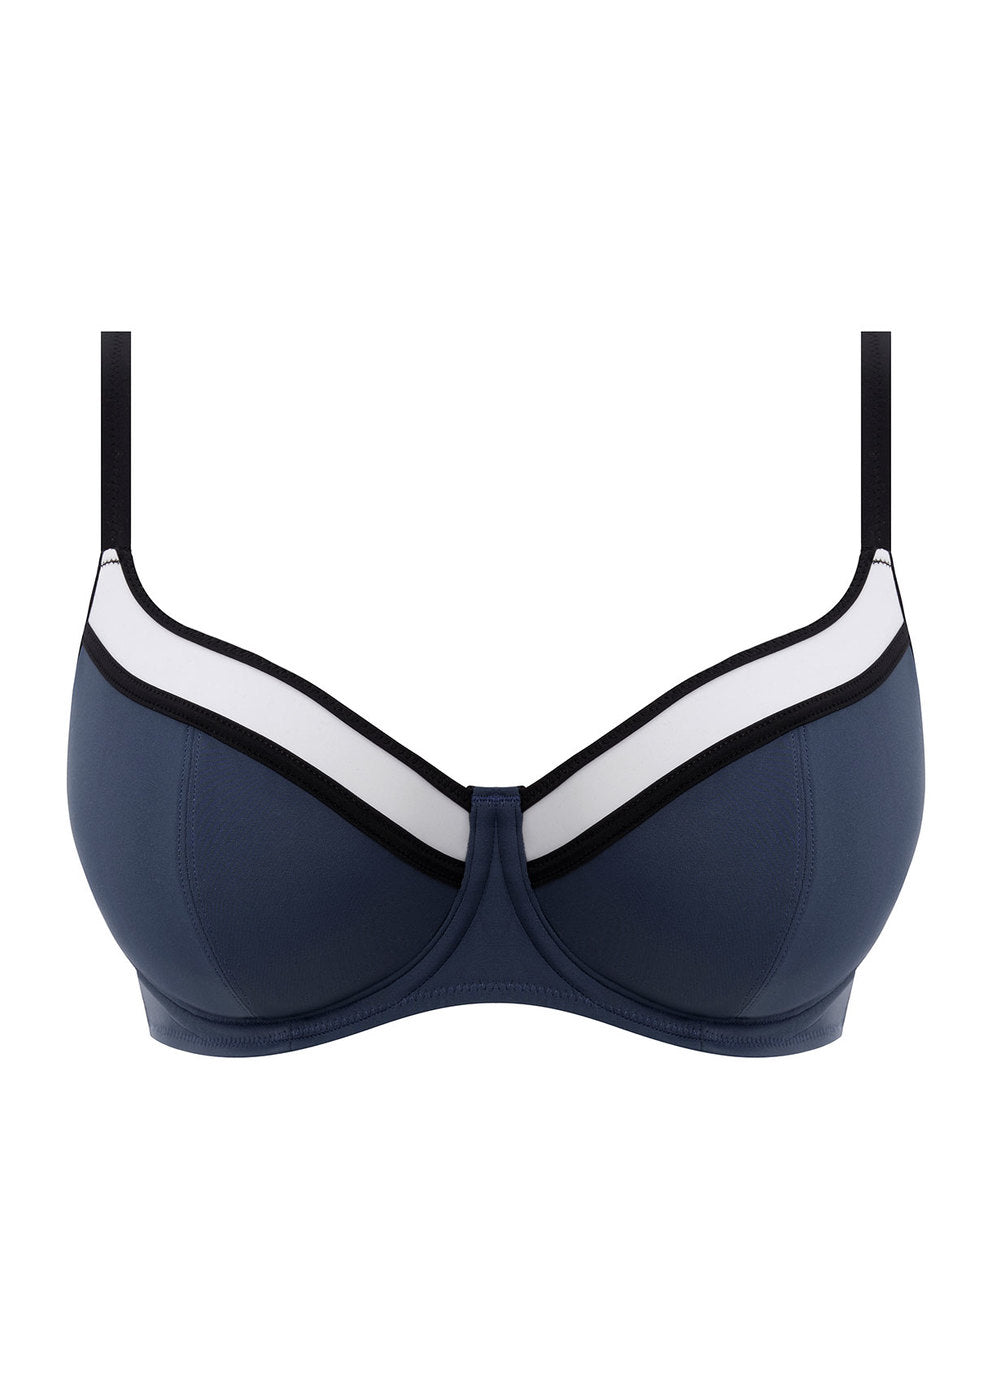 Freya Swimwear Colour Crush Bikini Top (6725696553025)